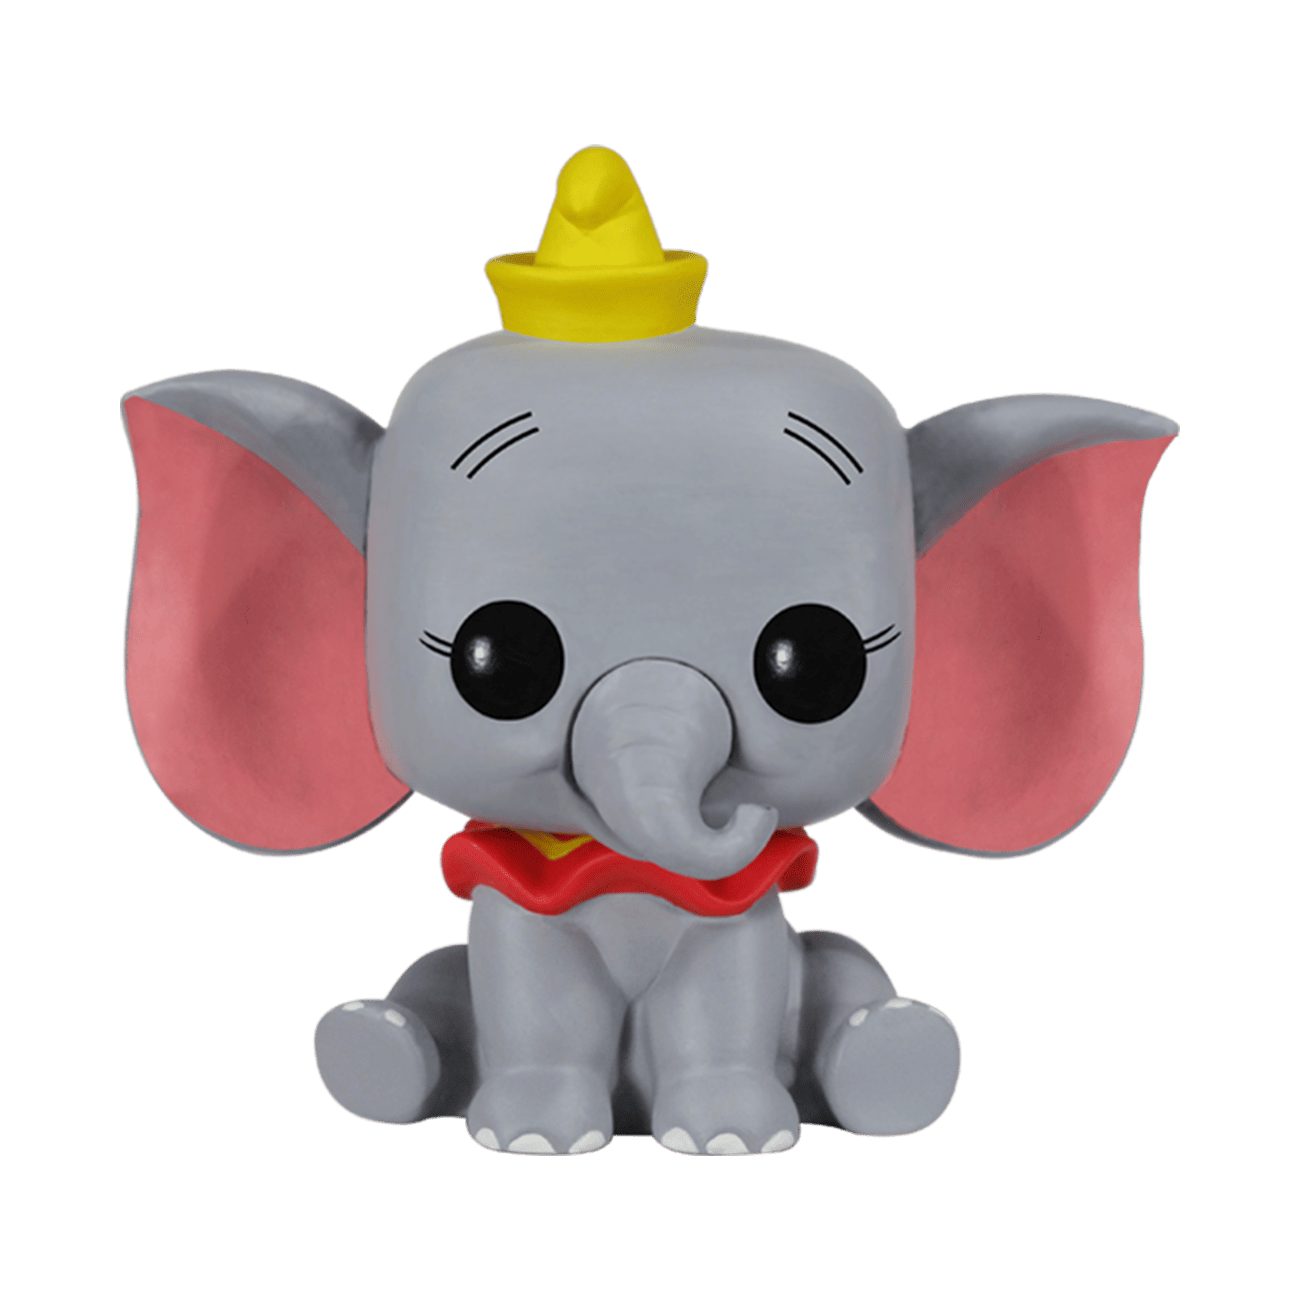 Buy Dumbo at Pop!